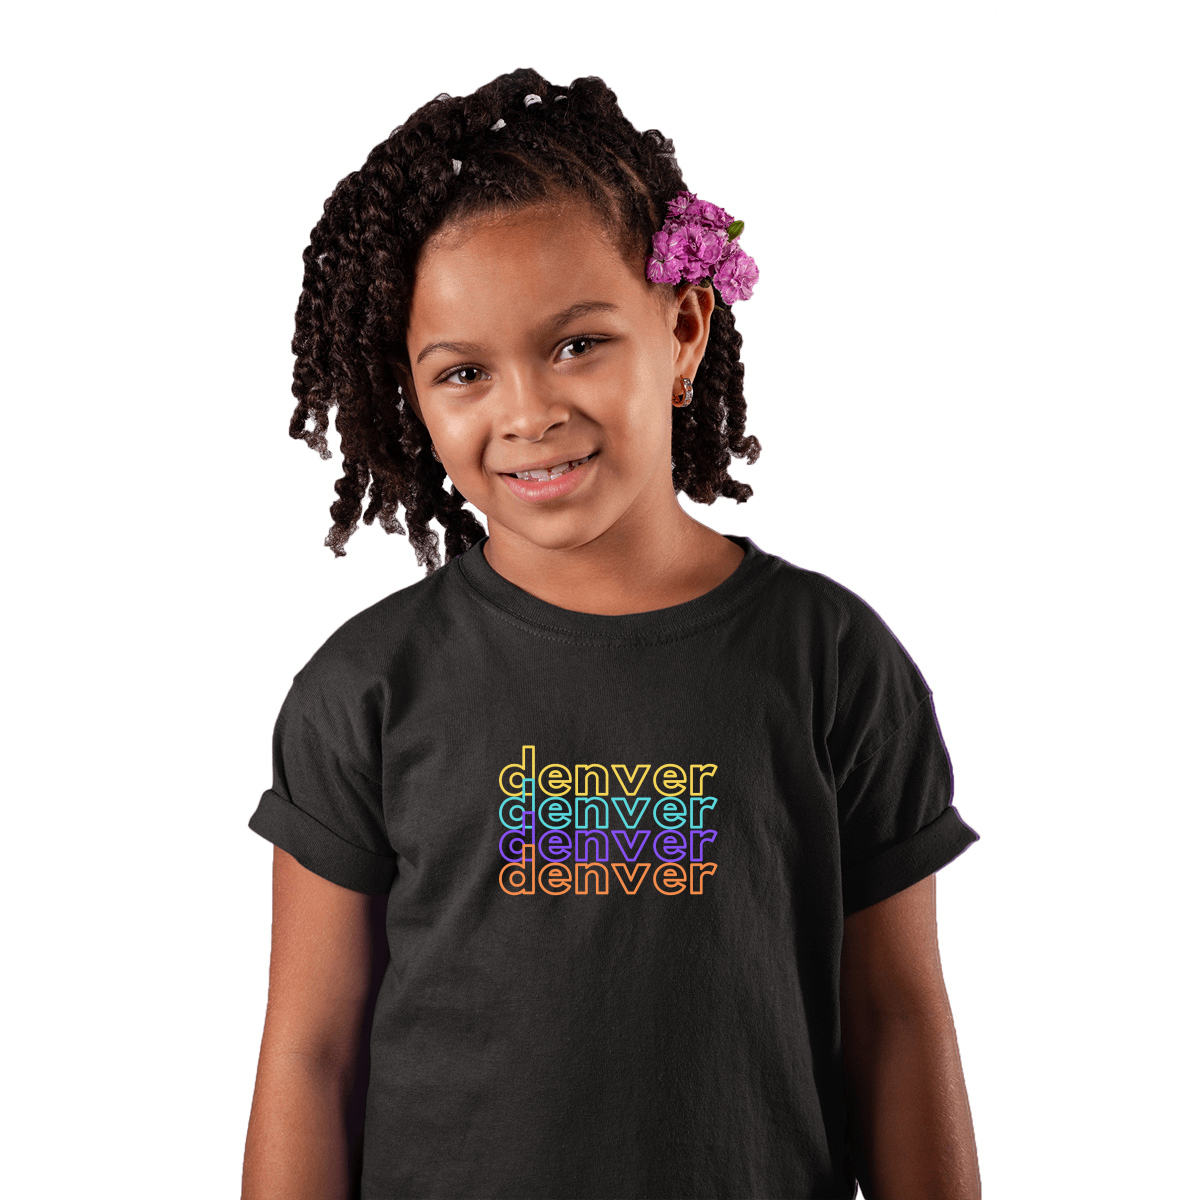 Denver Kids T-shirt | Black